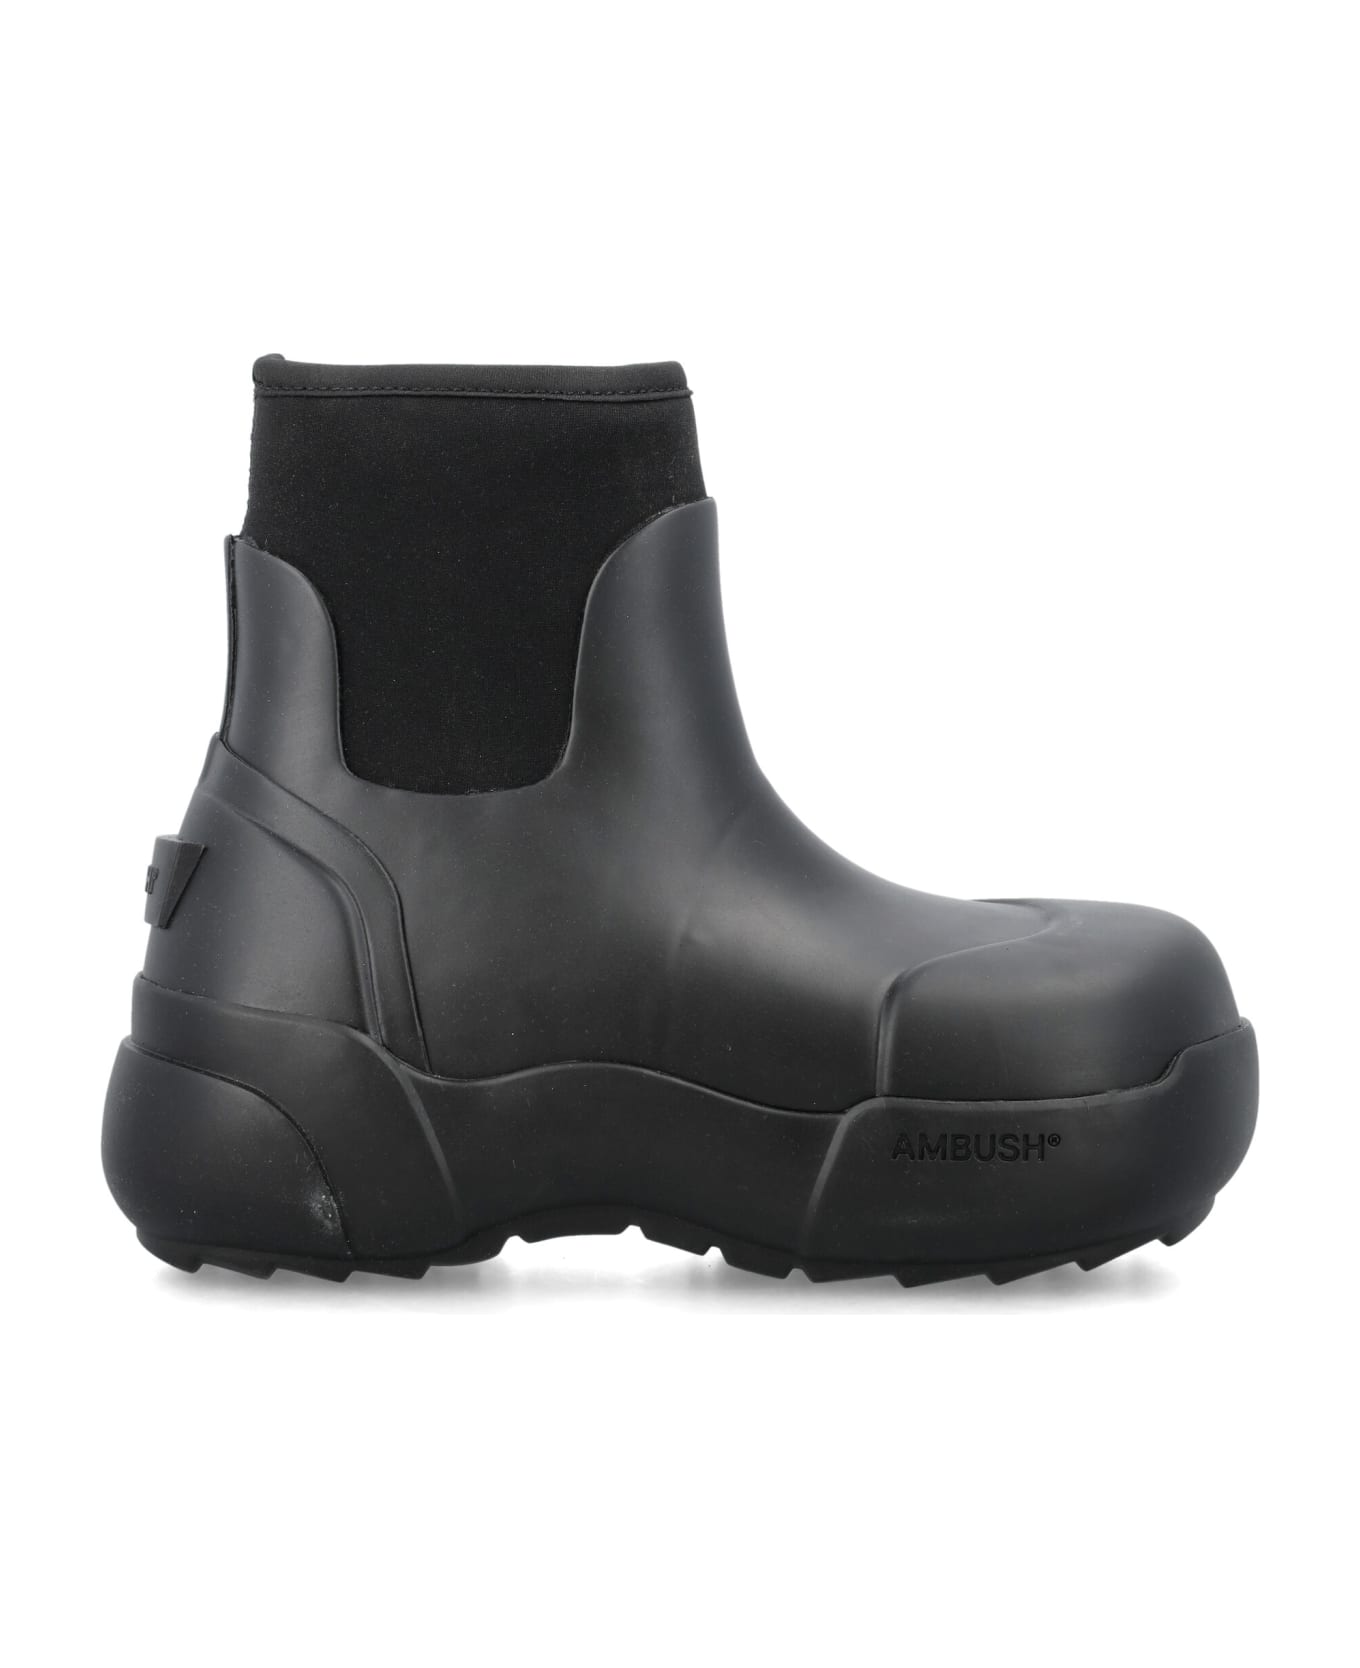 AMBUSH Rubber Boots - BLACK ブーツ